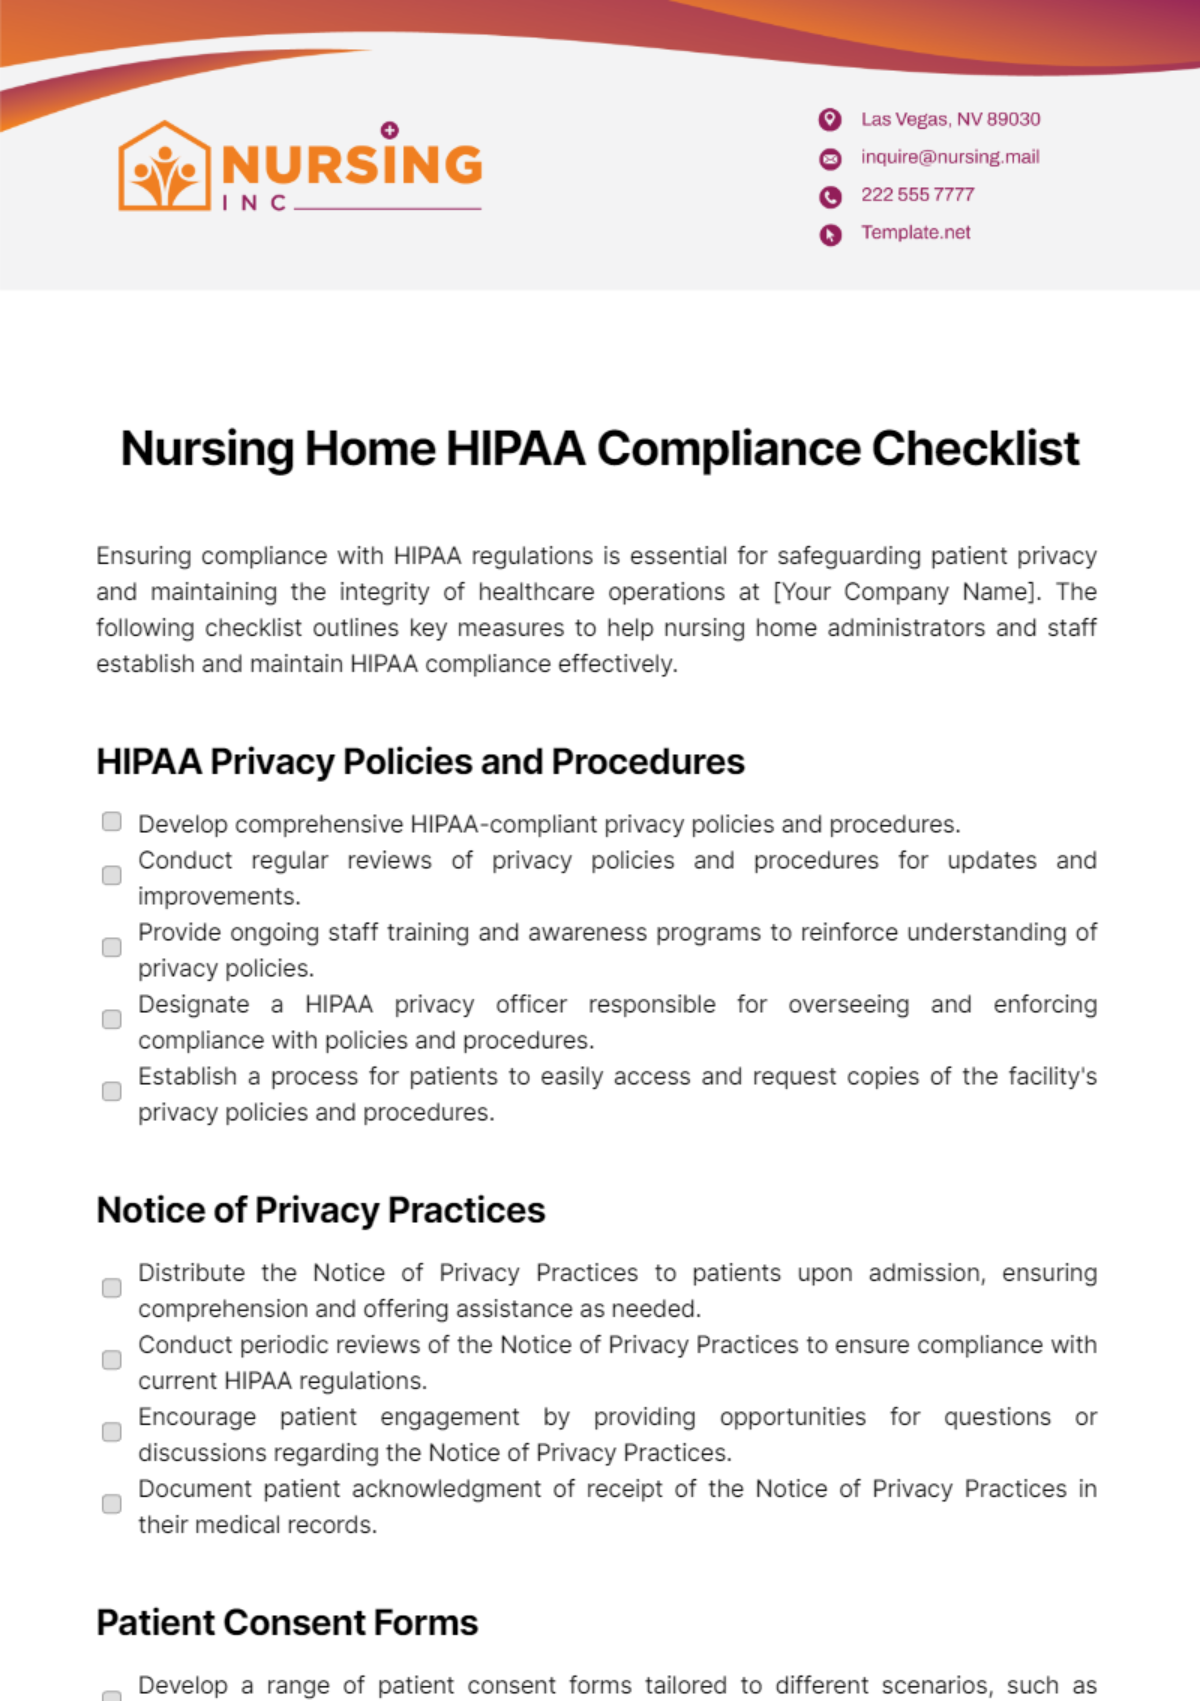 Nursing Home HIPAA Compliance Checklist Template